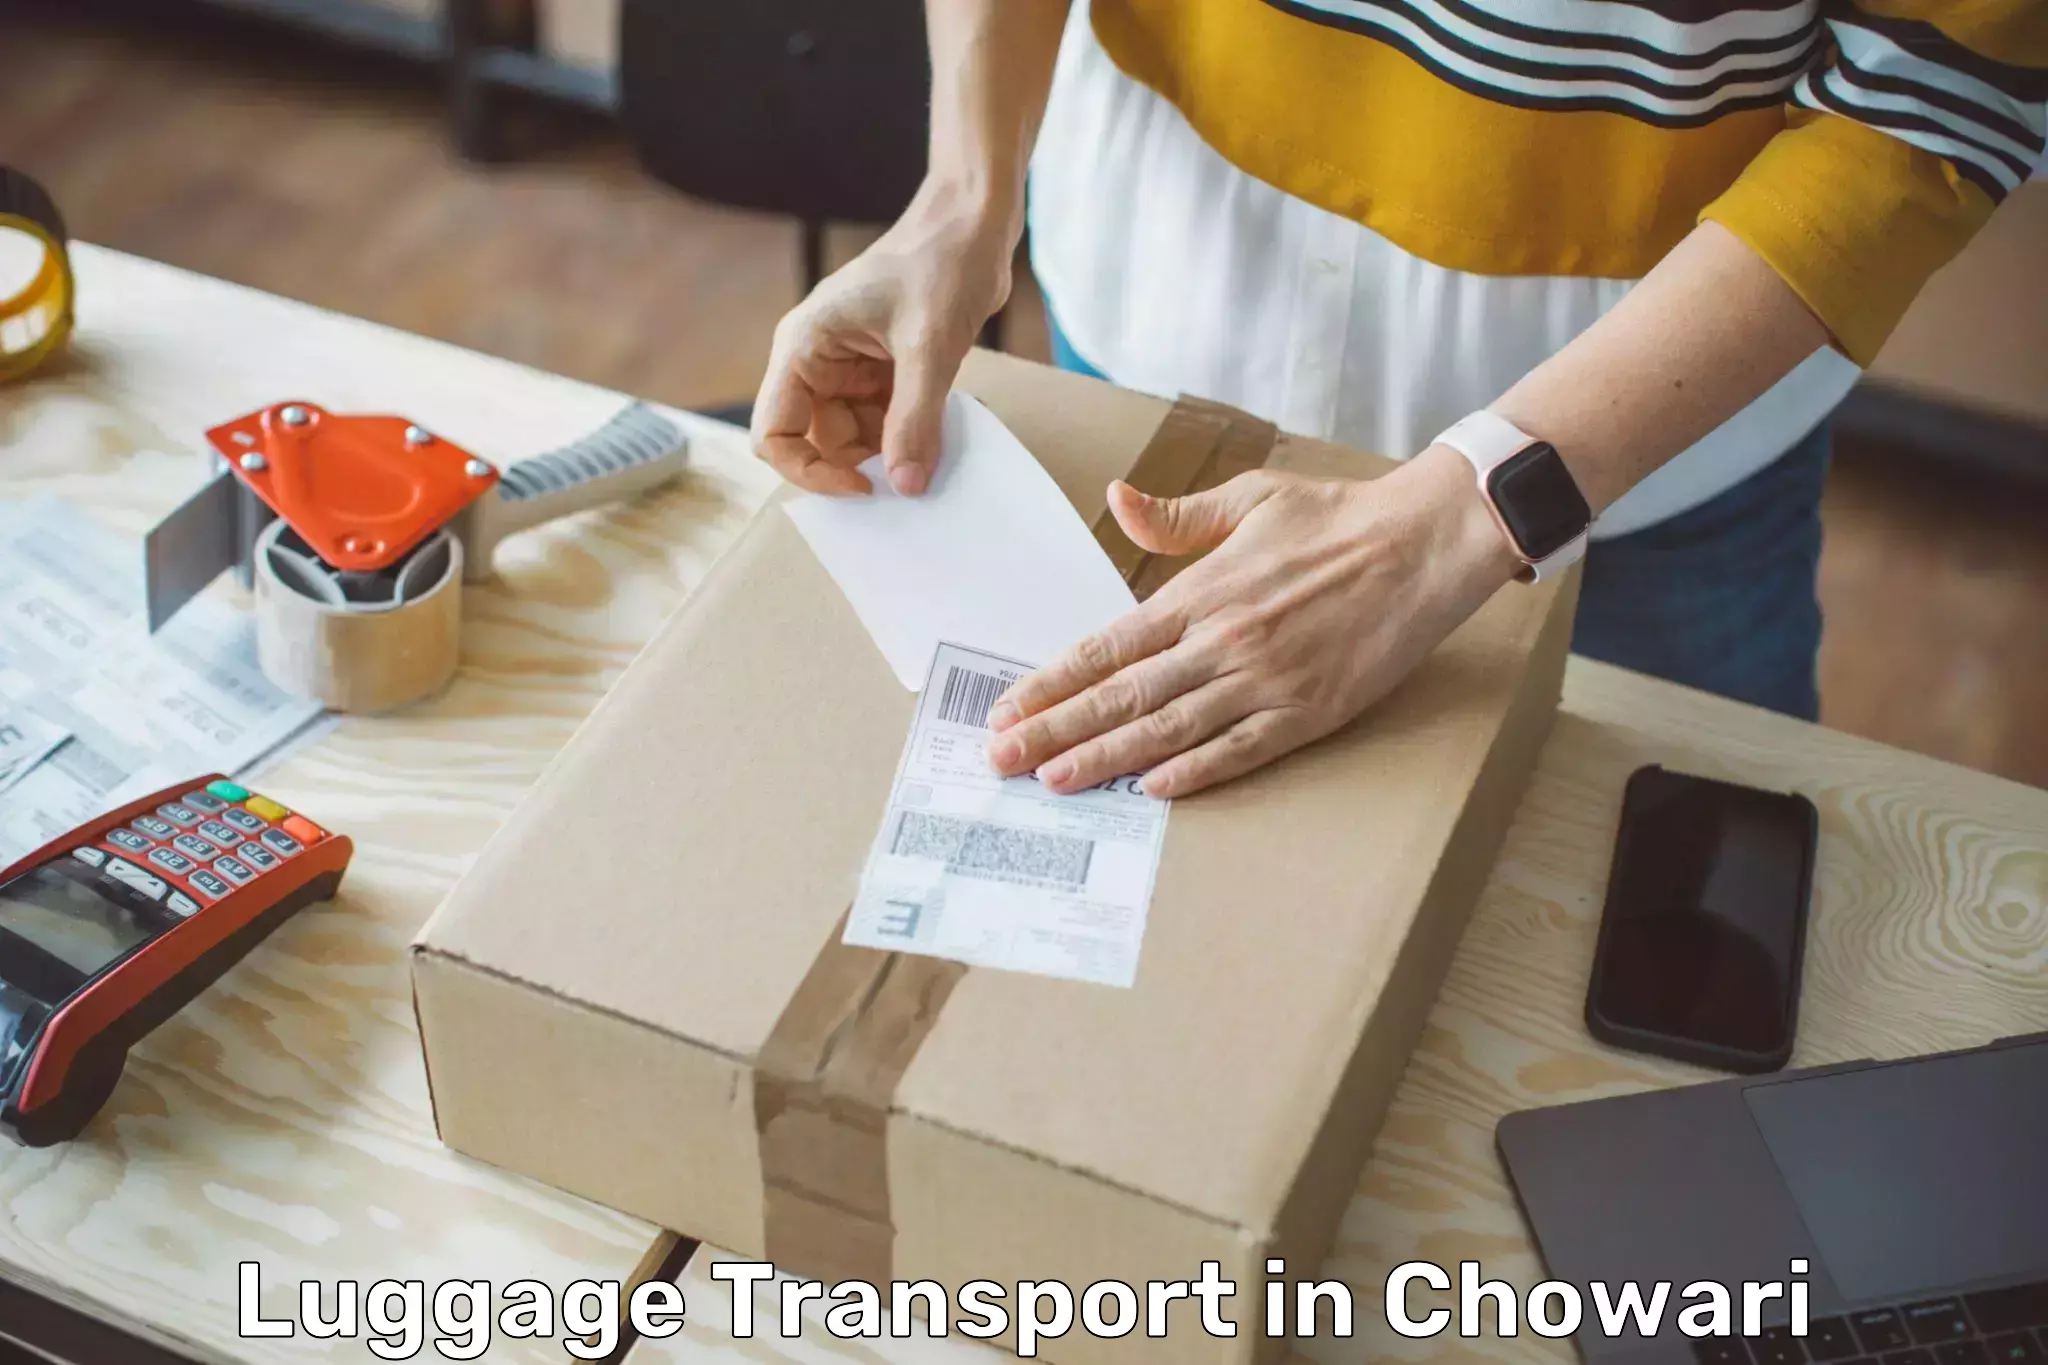 Baggage transport innovation in Chowari